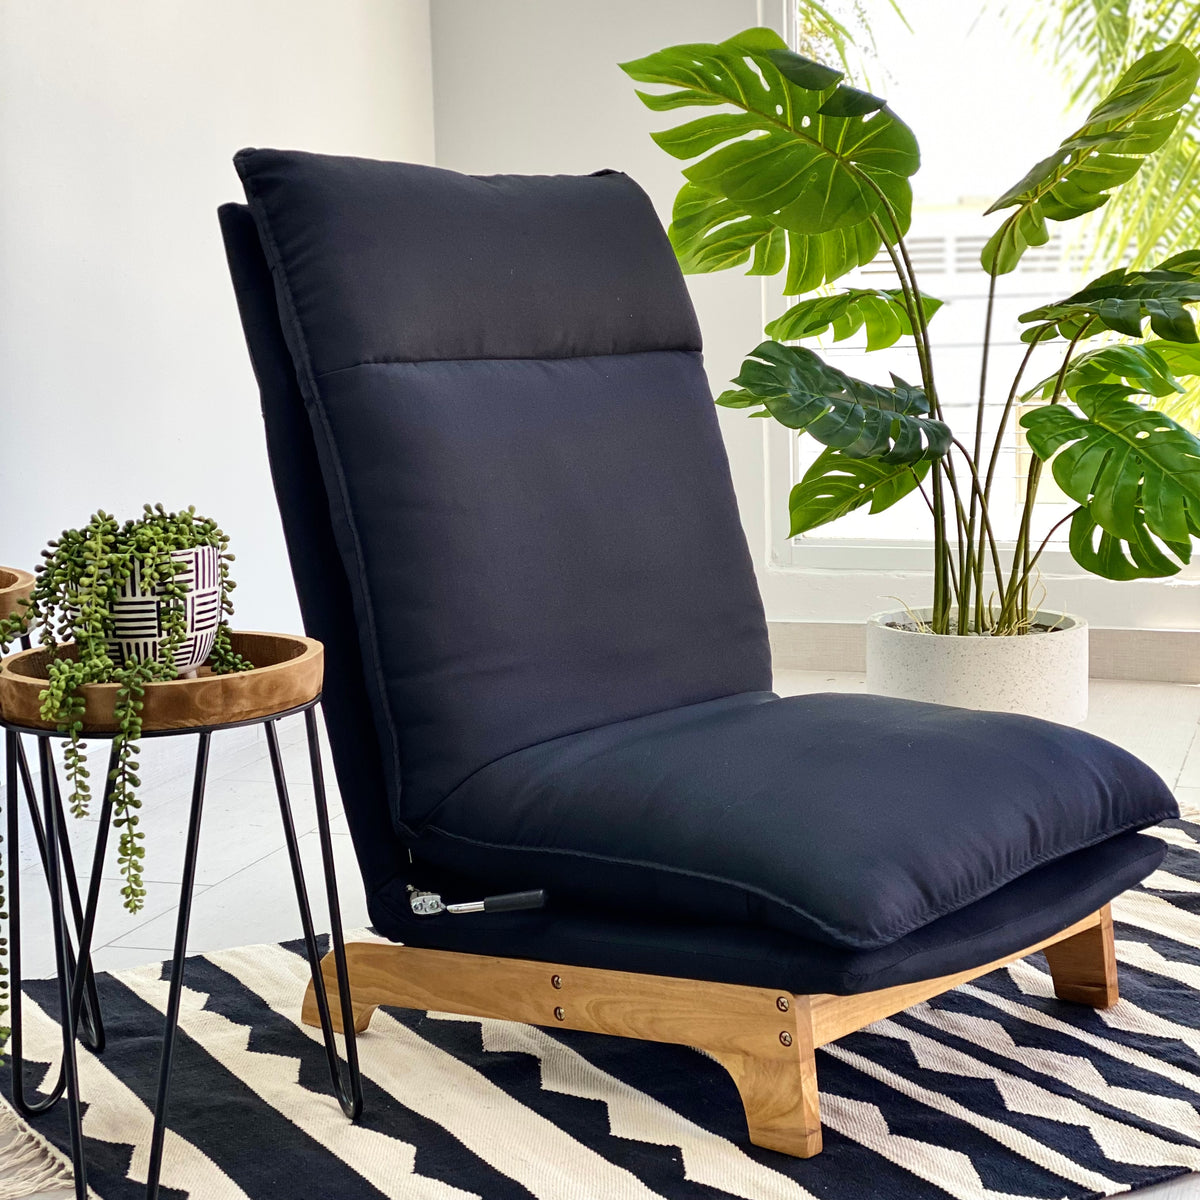 Reclining Lazy Chair Black Fabric